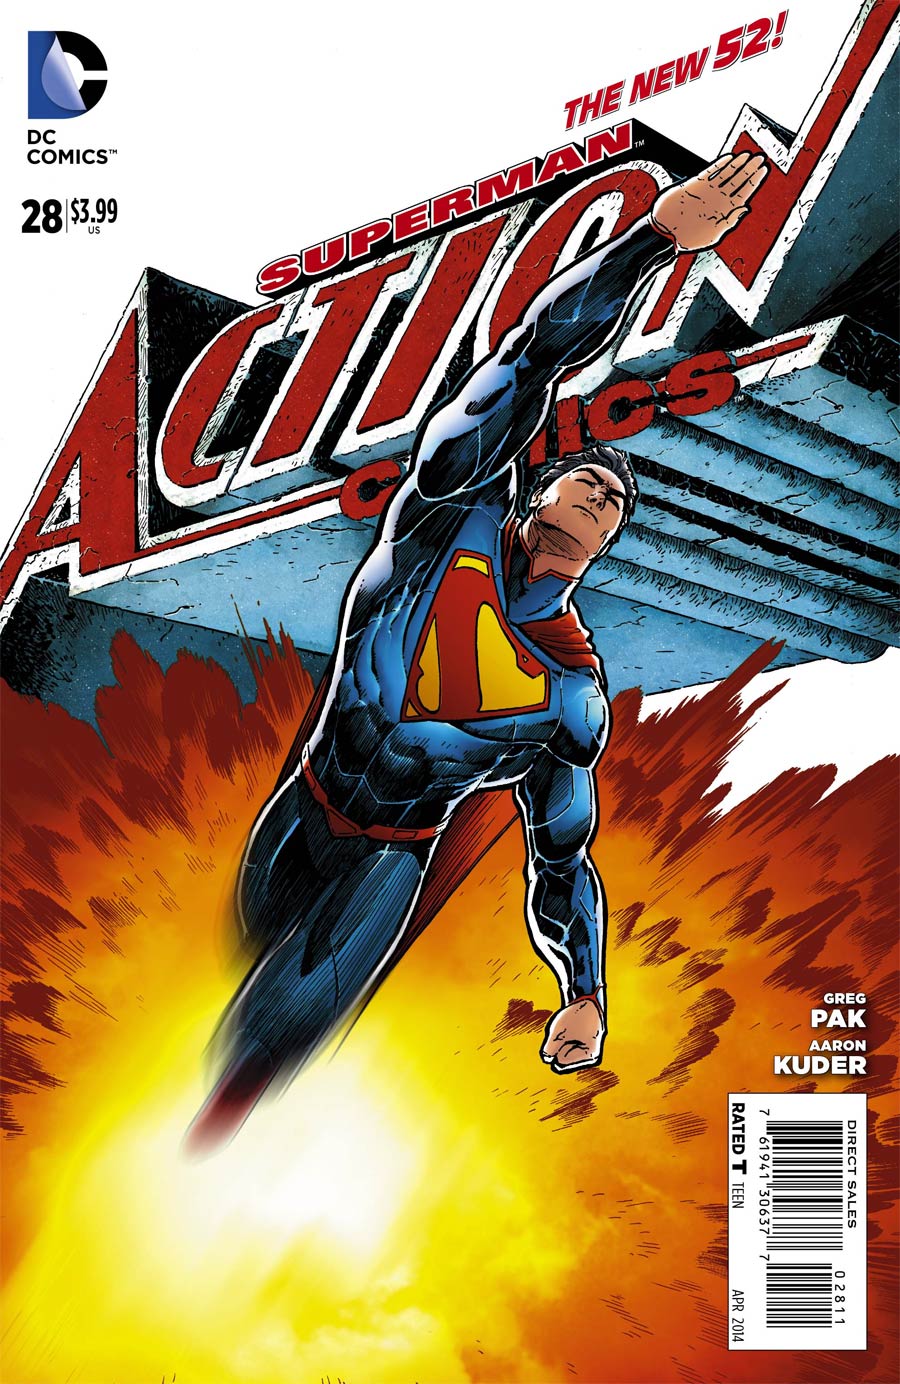 Action Comics Vol 2 #28 Cover A Regular Aaron Kuder Cover